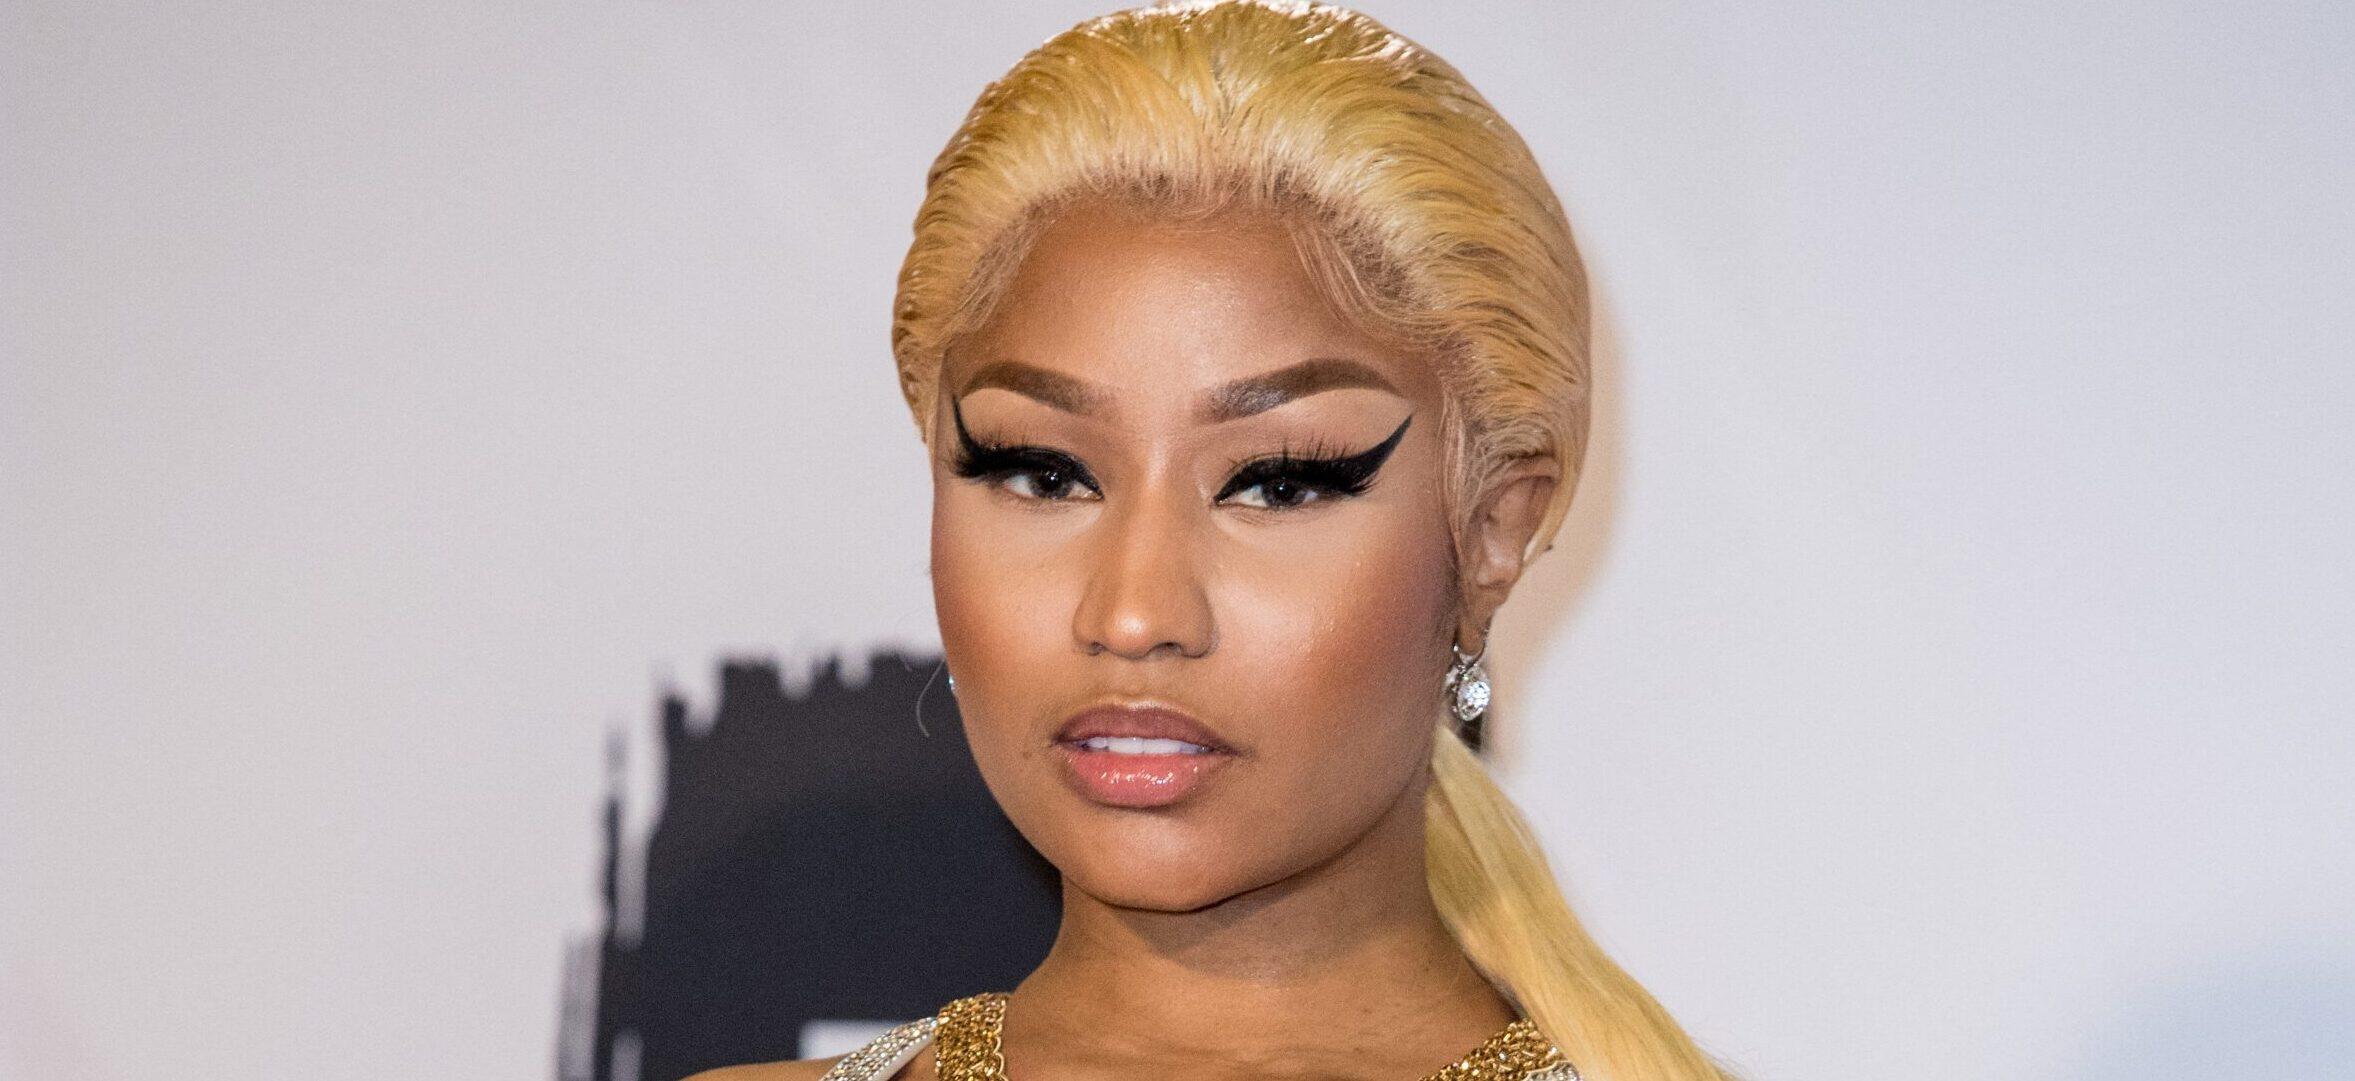 Nicki Minaj Showers ‘Barbie’ With Praise Following Her Stunning Premiere Appearance